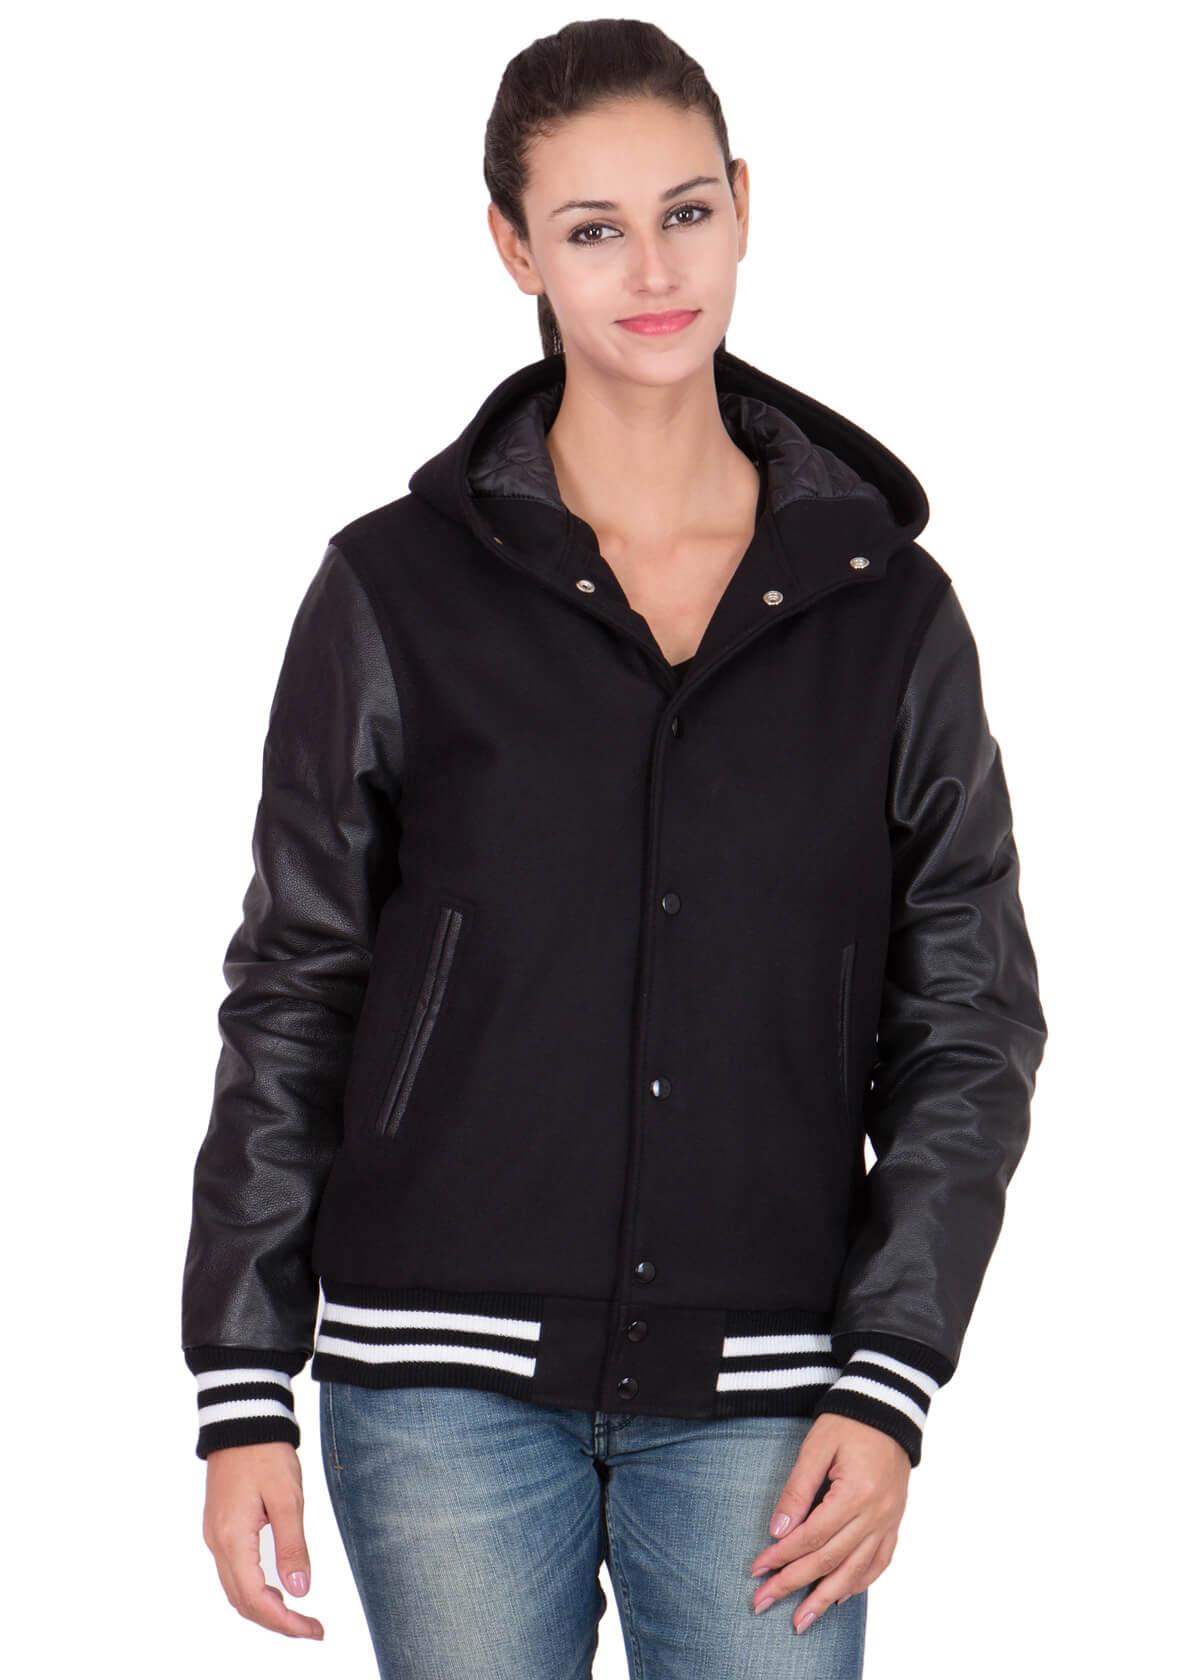 Womens Black Hood Varsity Jacket With Leather Sleeves-1